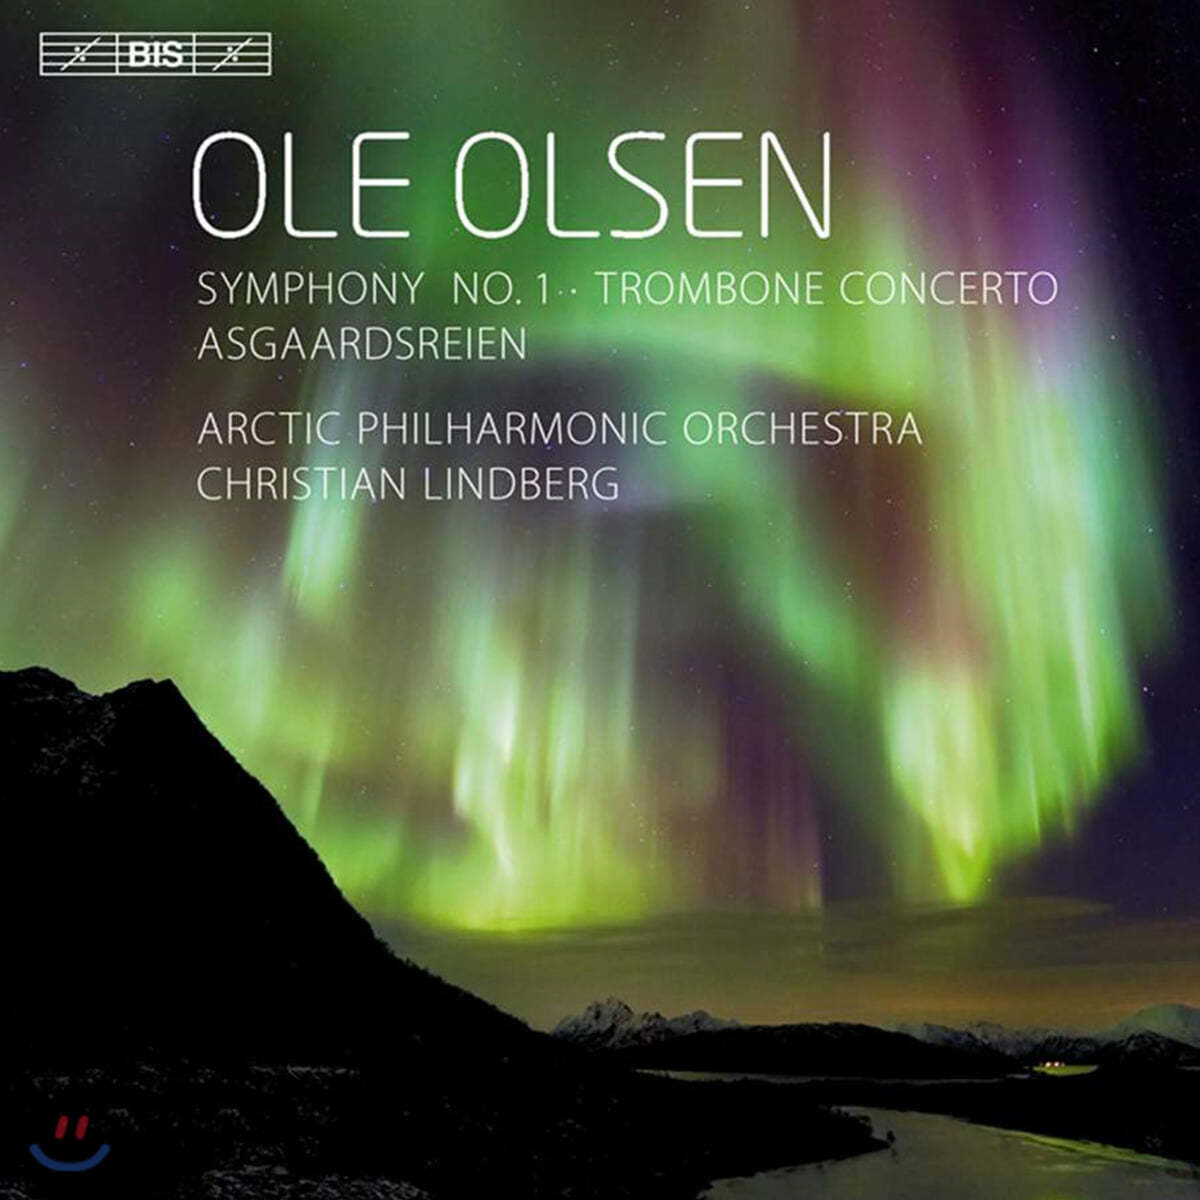 Christian Lindberg 올레 올슨: 관현악 작품집 (Ole Olsen: Orchestral Works)